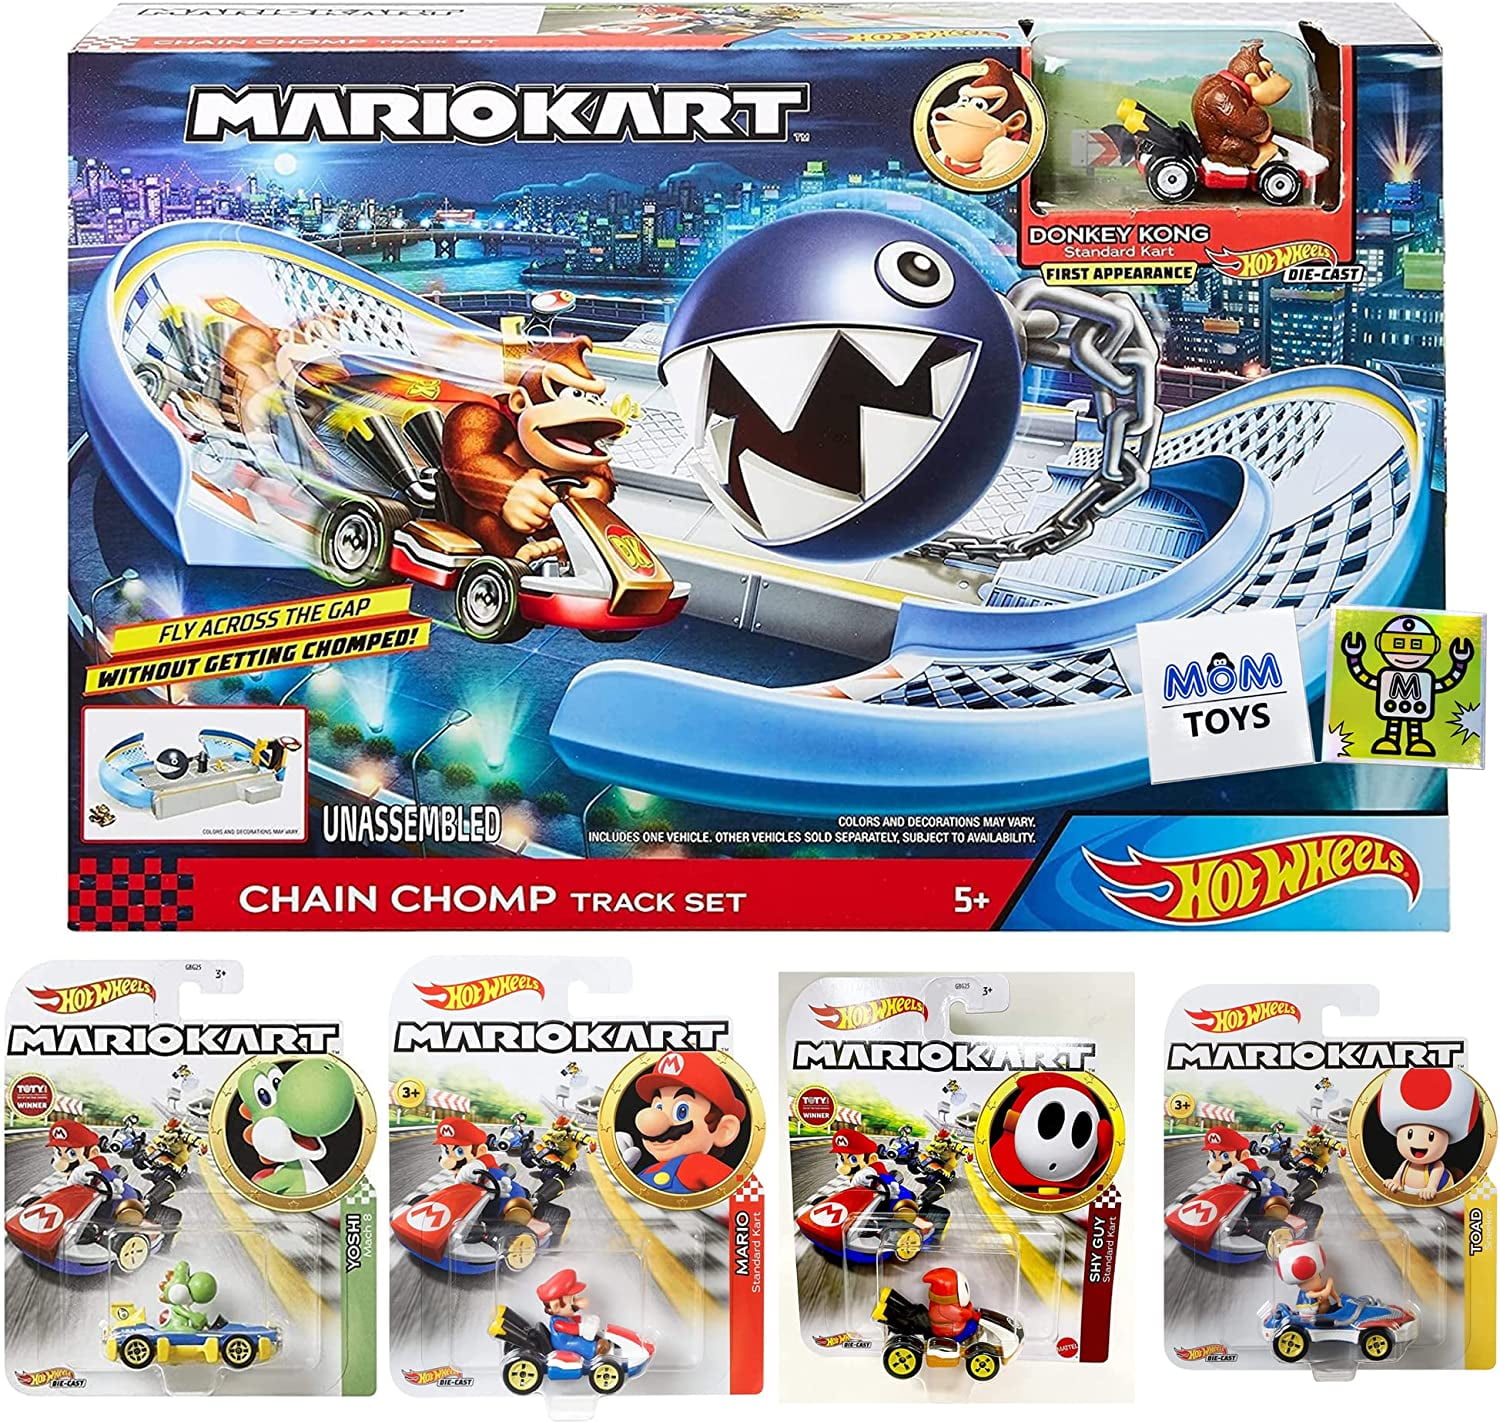  Hot Wheels MarioKart Mario Circuit Track Set and 4 Mario  Die-cast